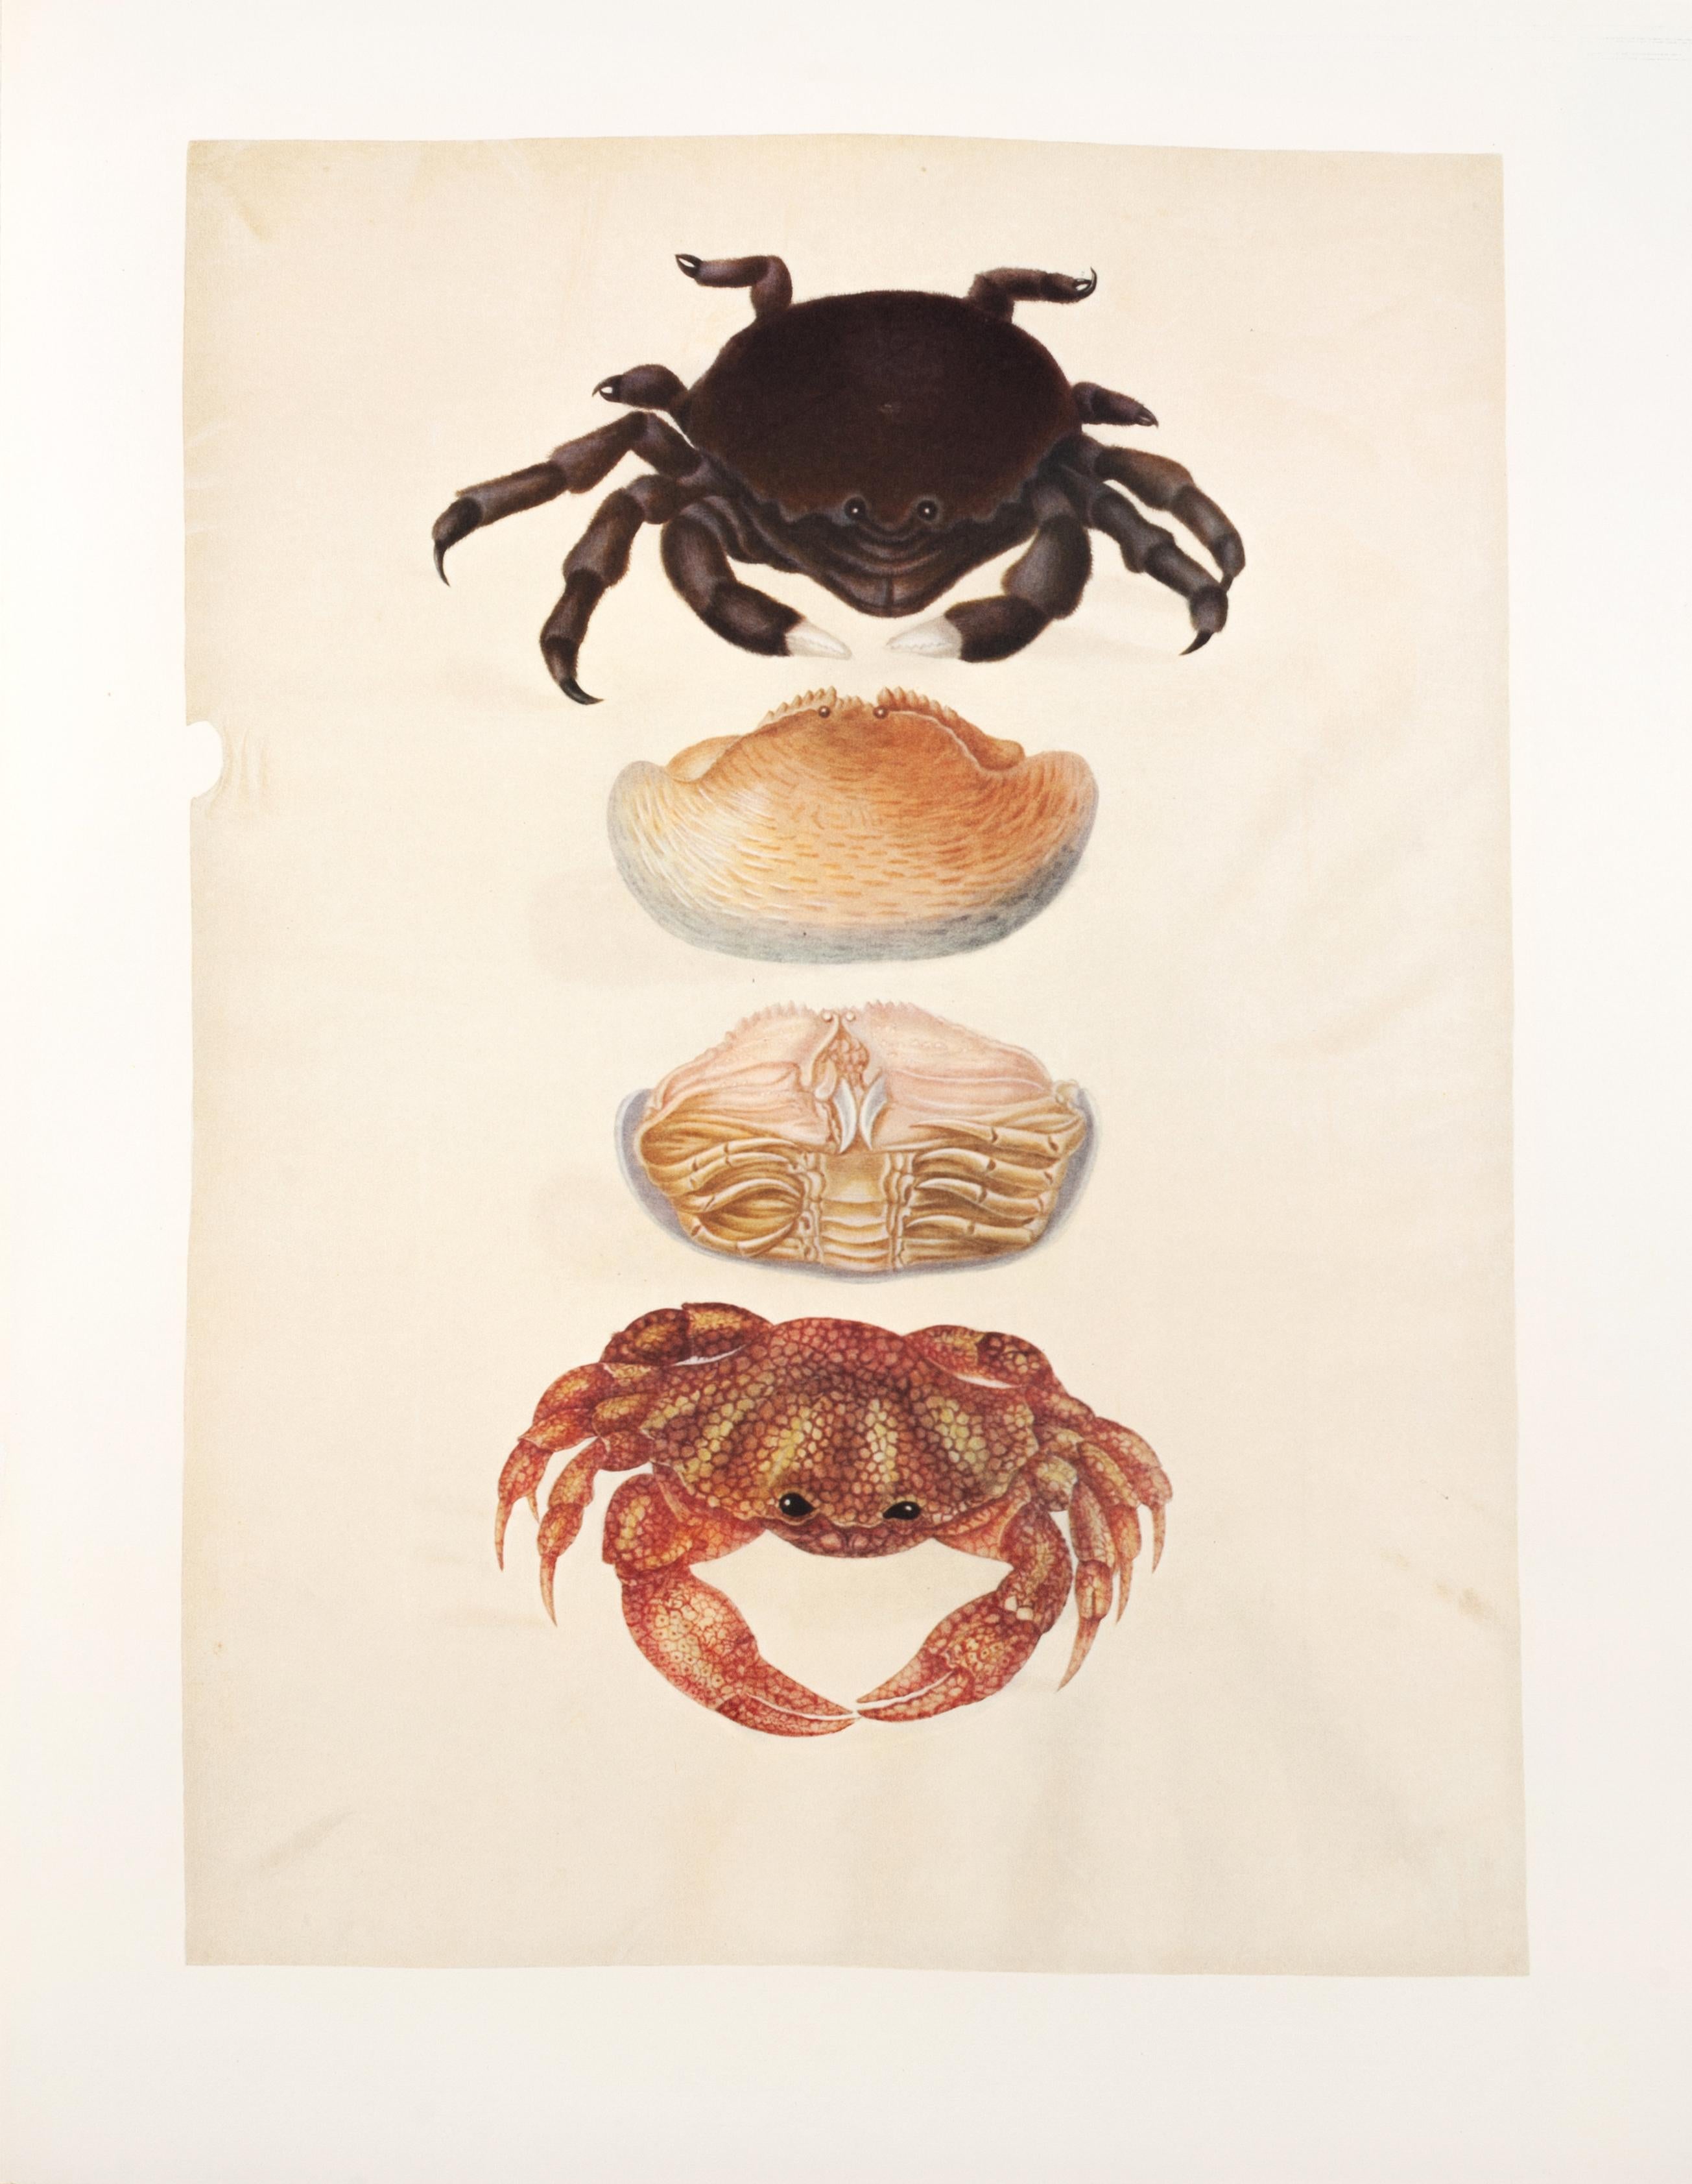 14. Sponge crab, Calappid, Lophozozymus octodentatus - Print by Maria Sybilla Merian